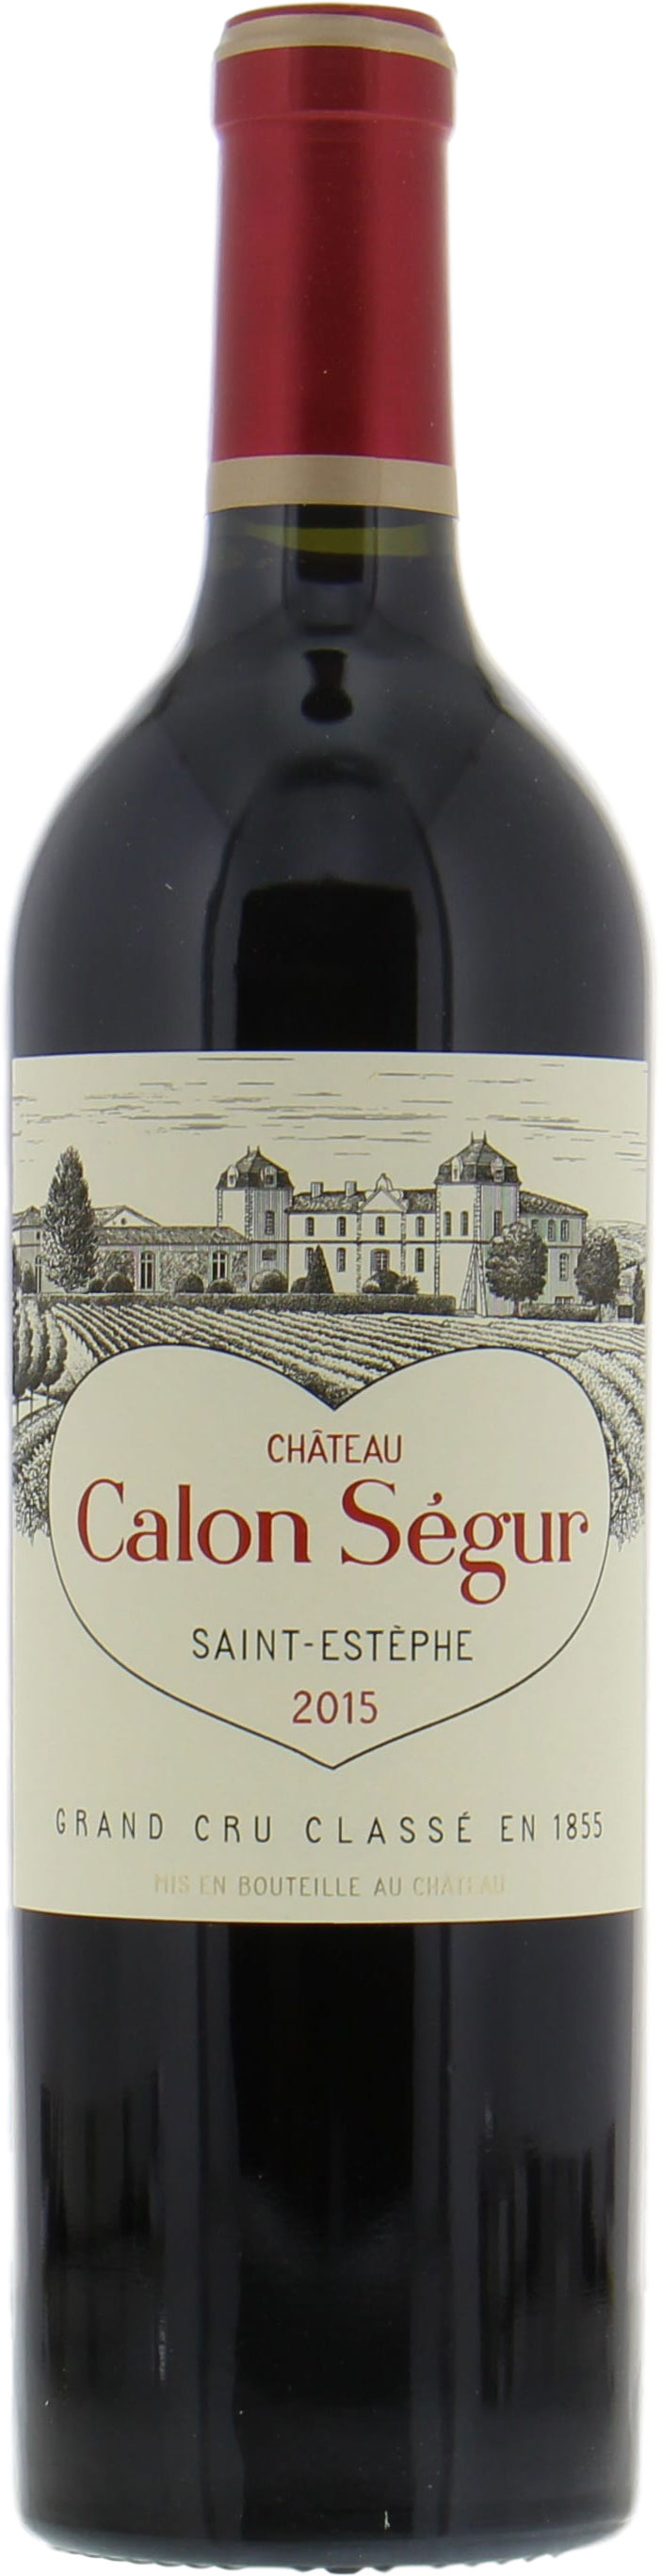 Chateau Calon Segur - Chateau Calon Segur 2015 Perfect